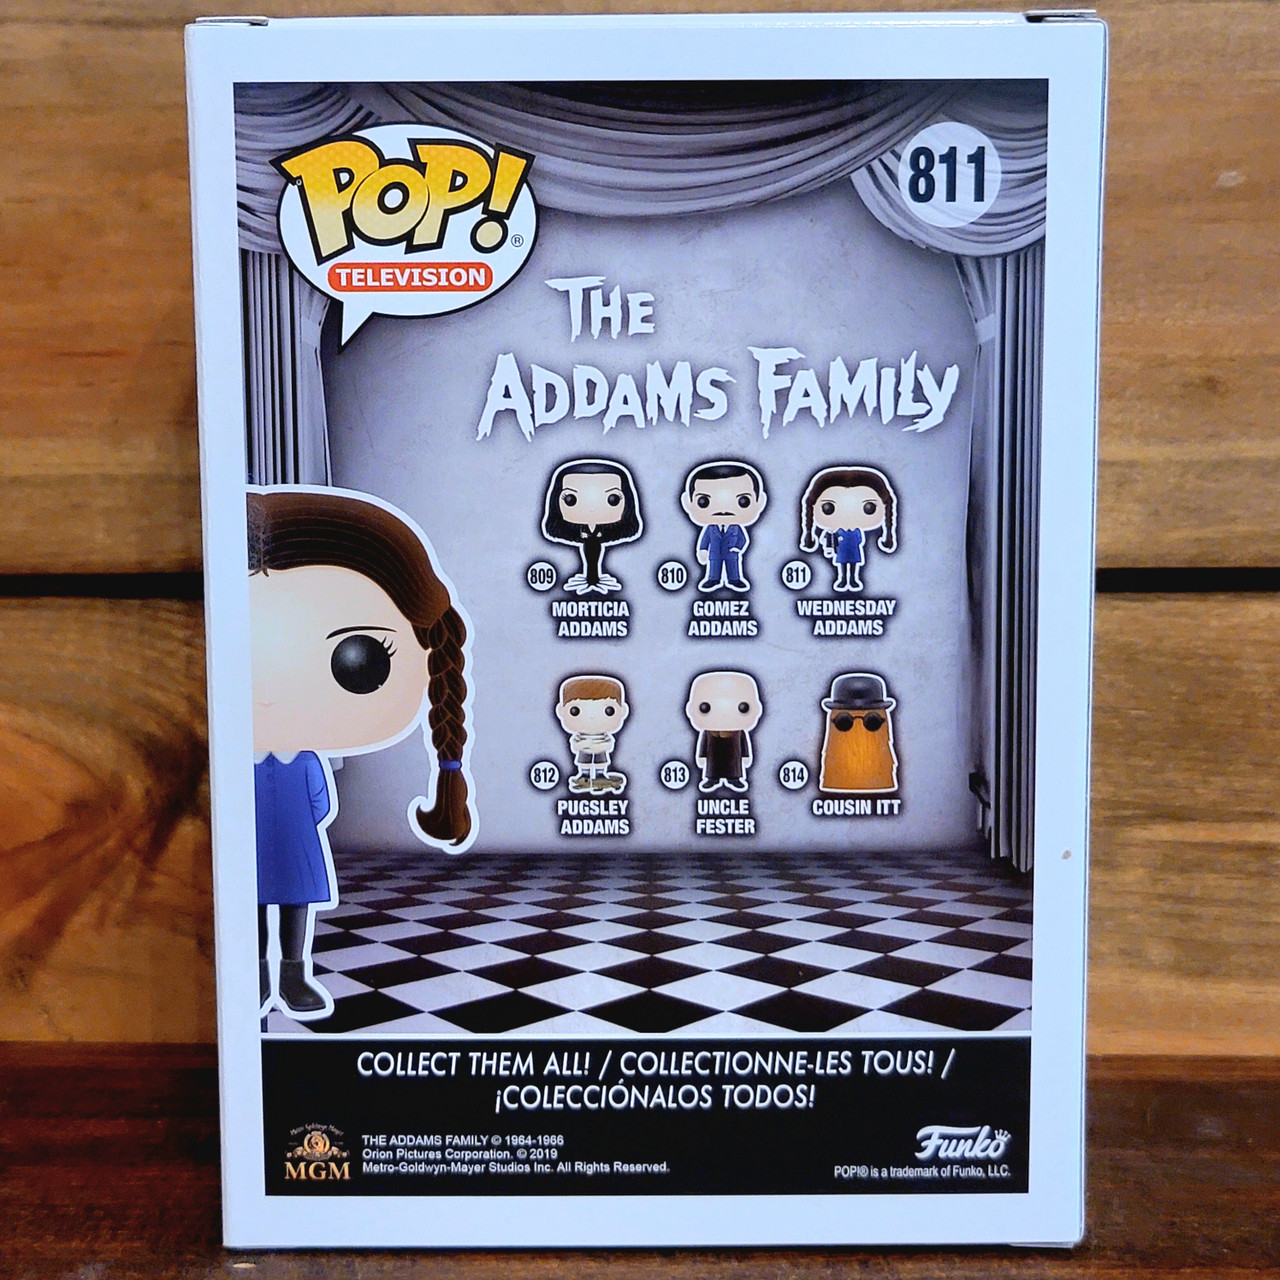 Wednesday Addams 811 Addams Family Television Funko Pop! Vinyl Figure - MC  Collectible